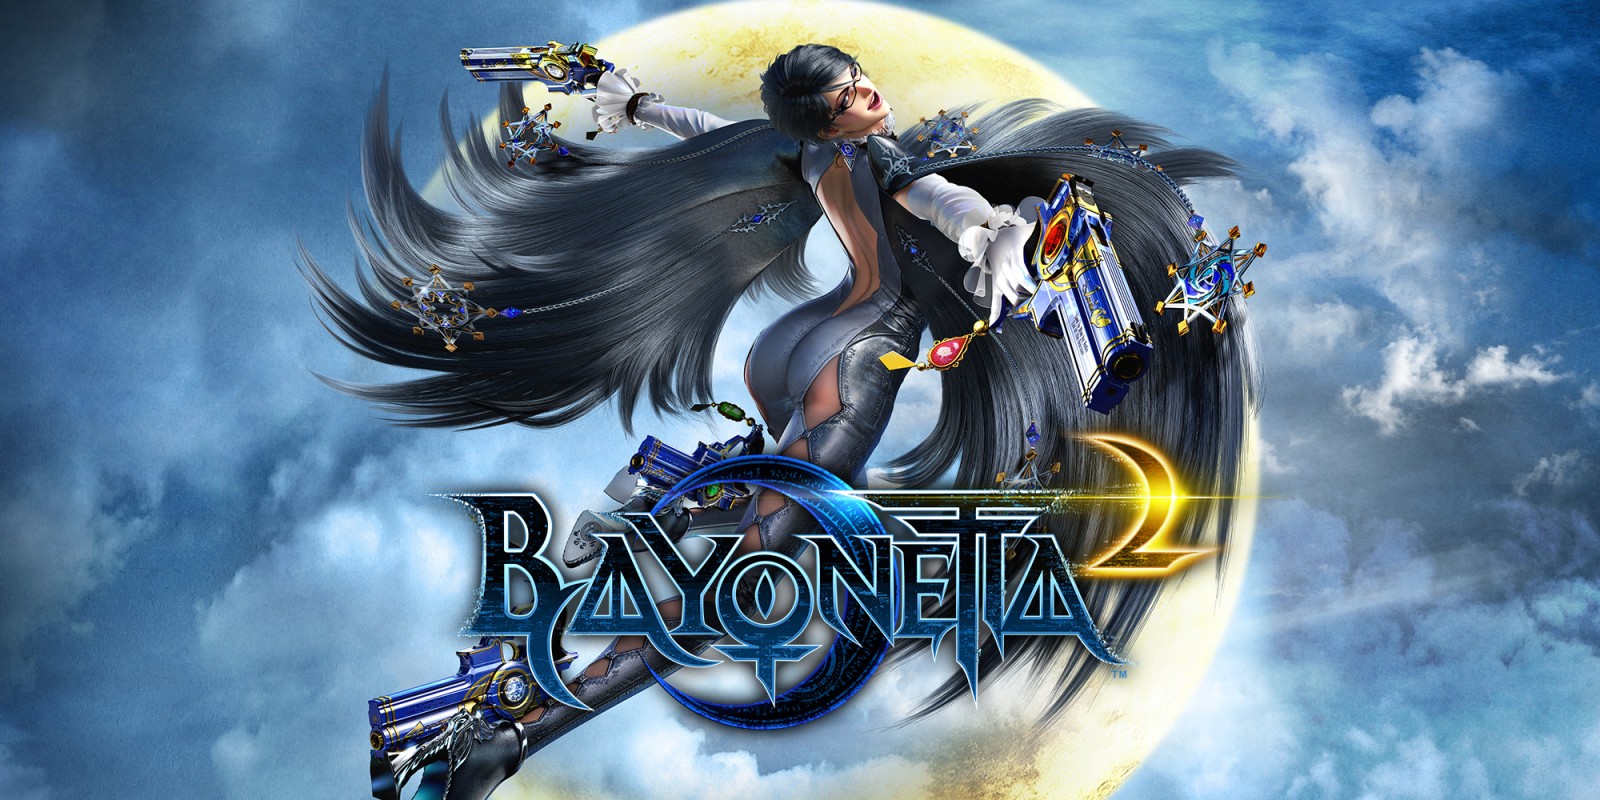 Bayonetta 2 free download download pof